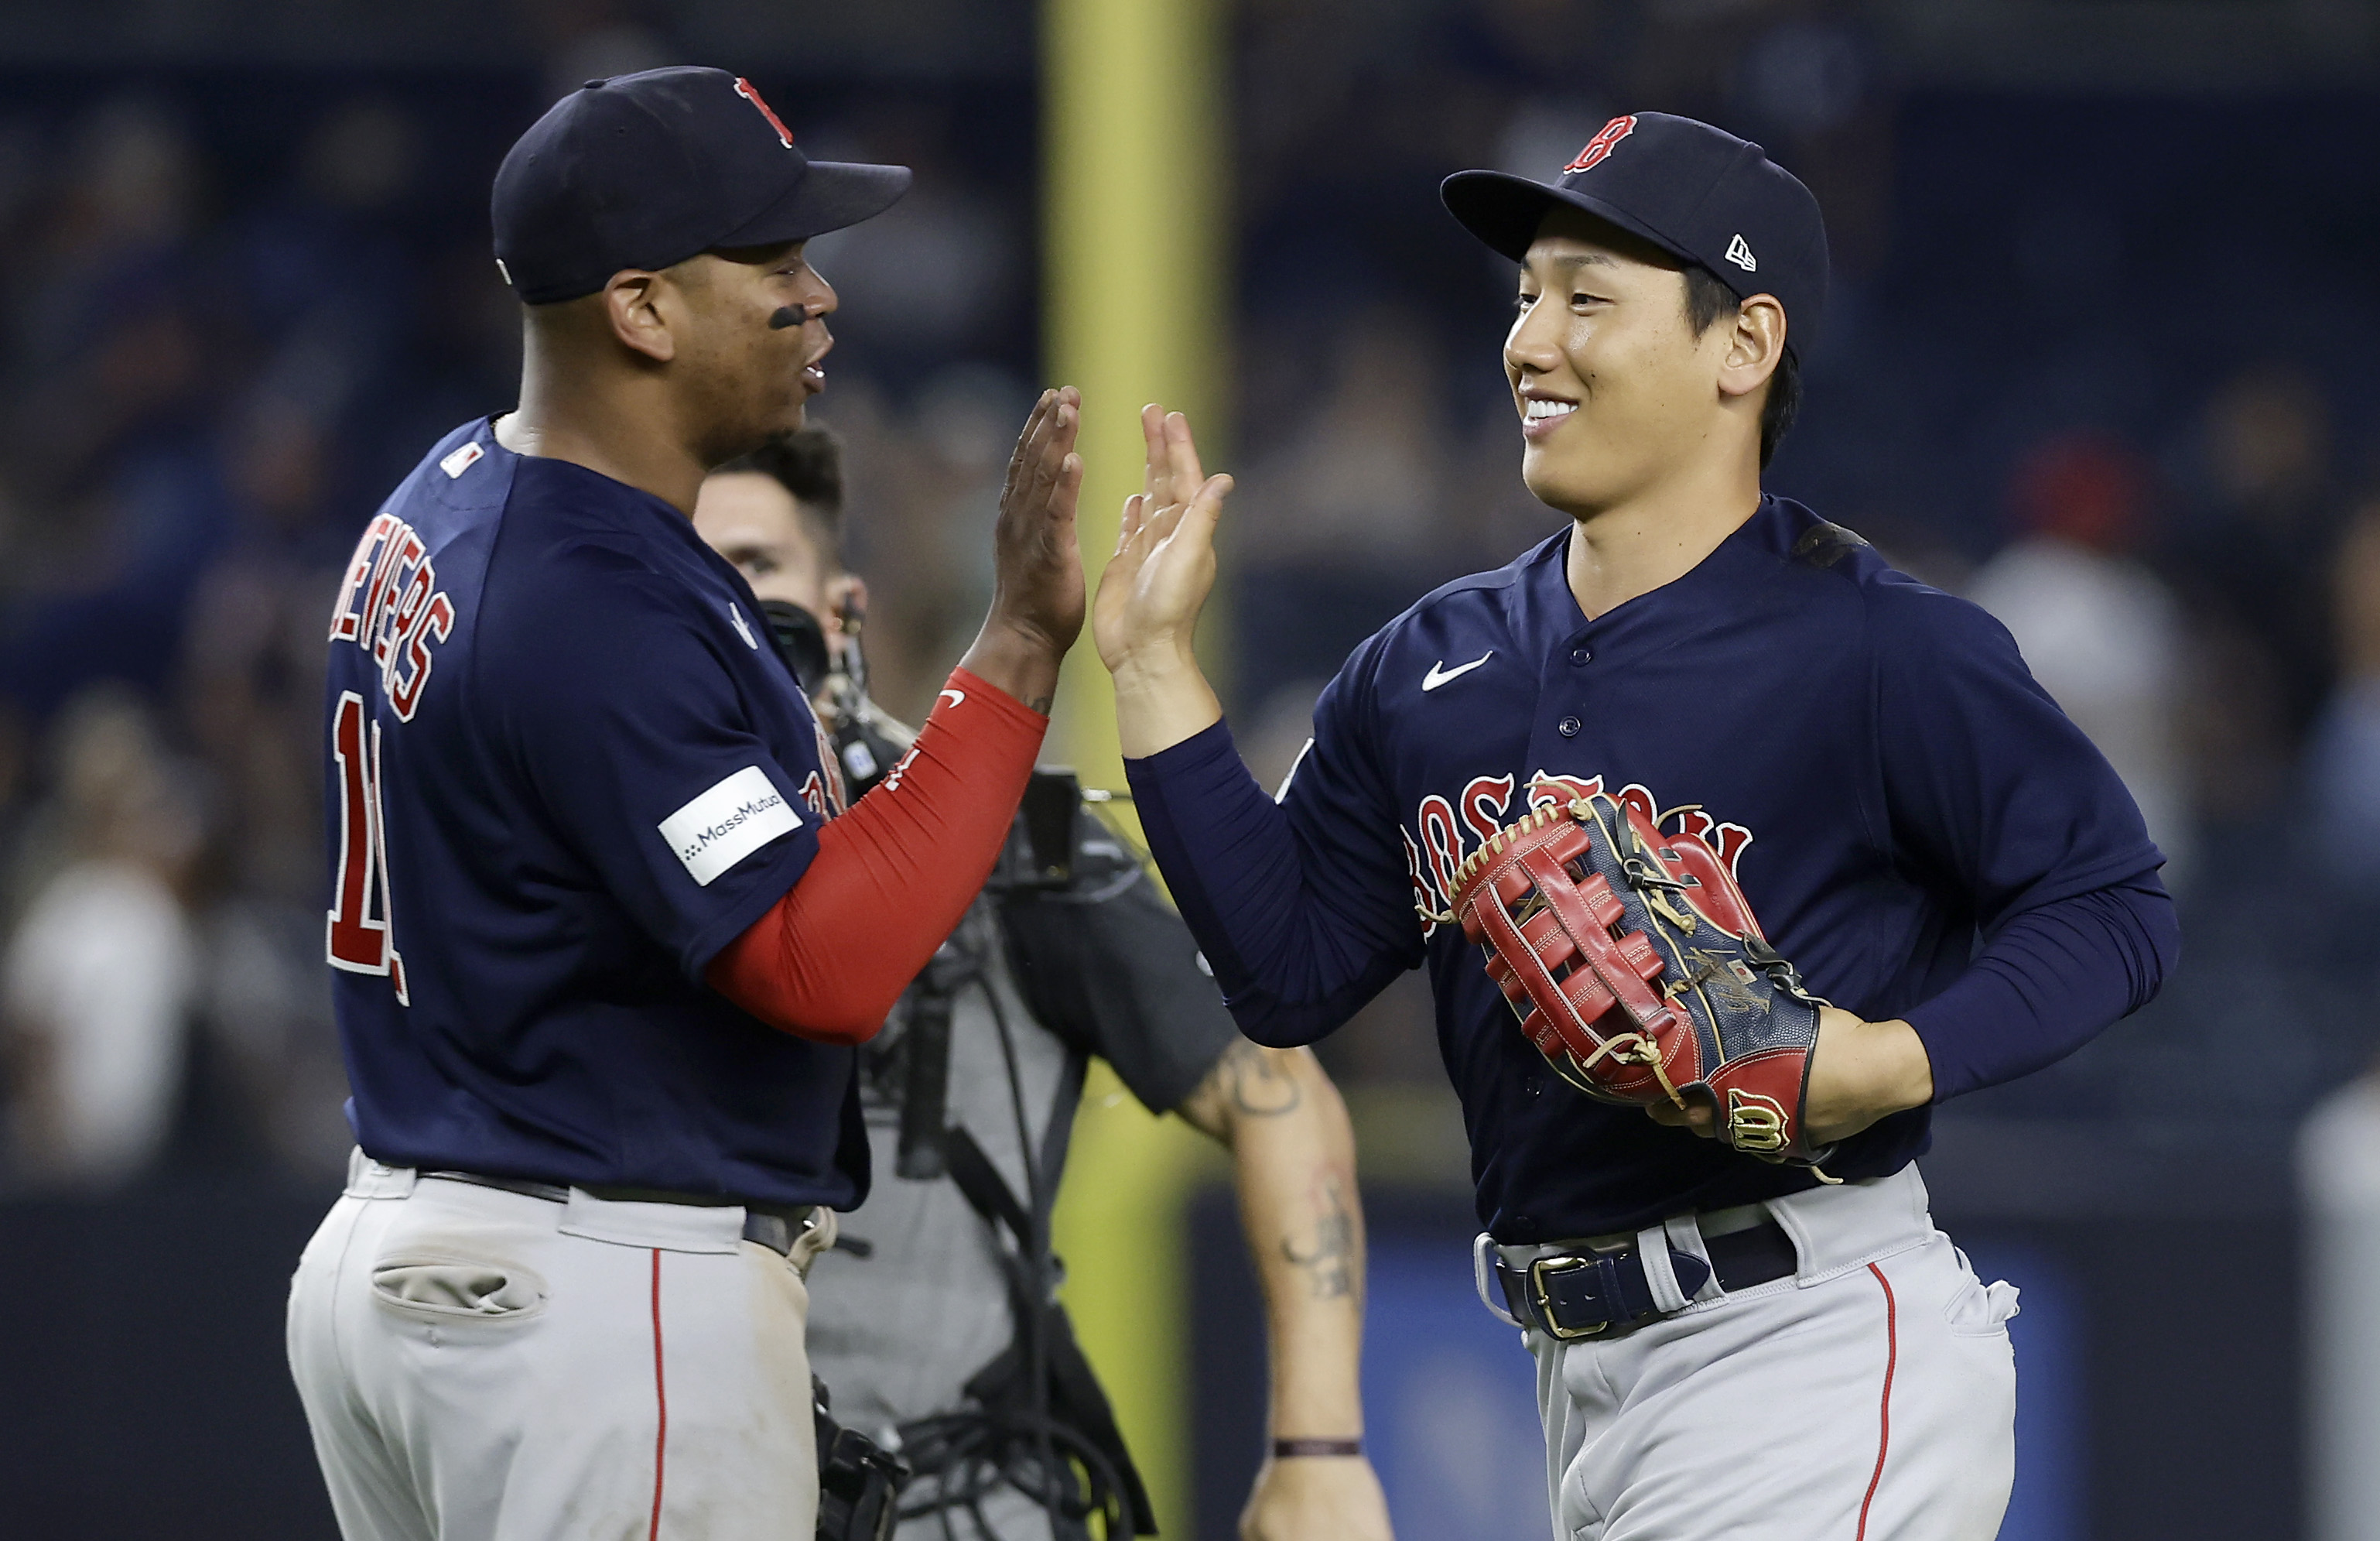 Yoshida, Bello lead Red Sox over skidding Yankees, who drop sixth